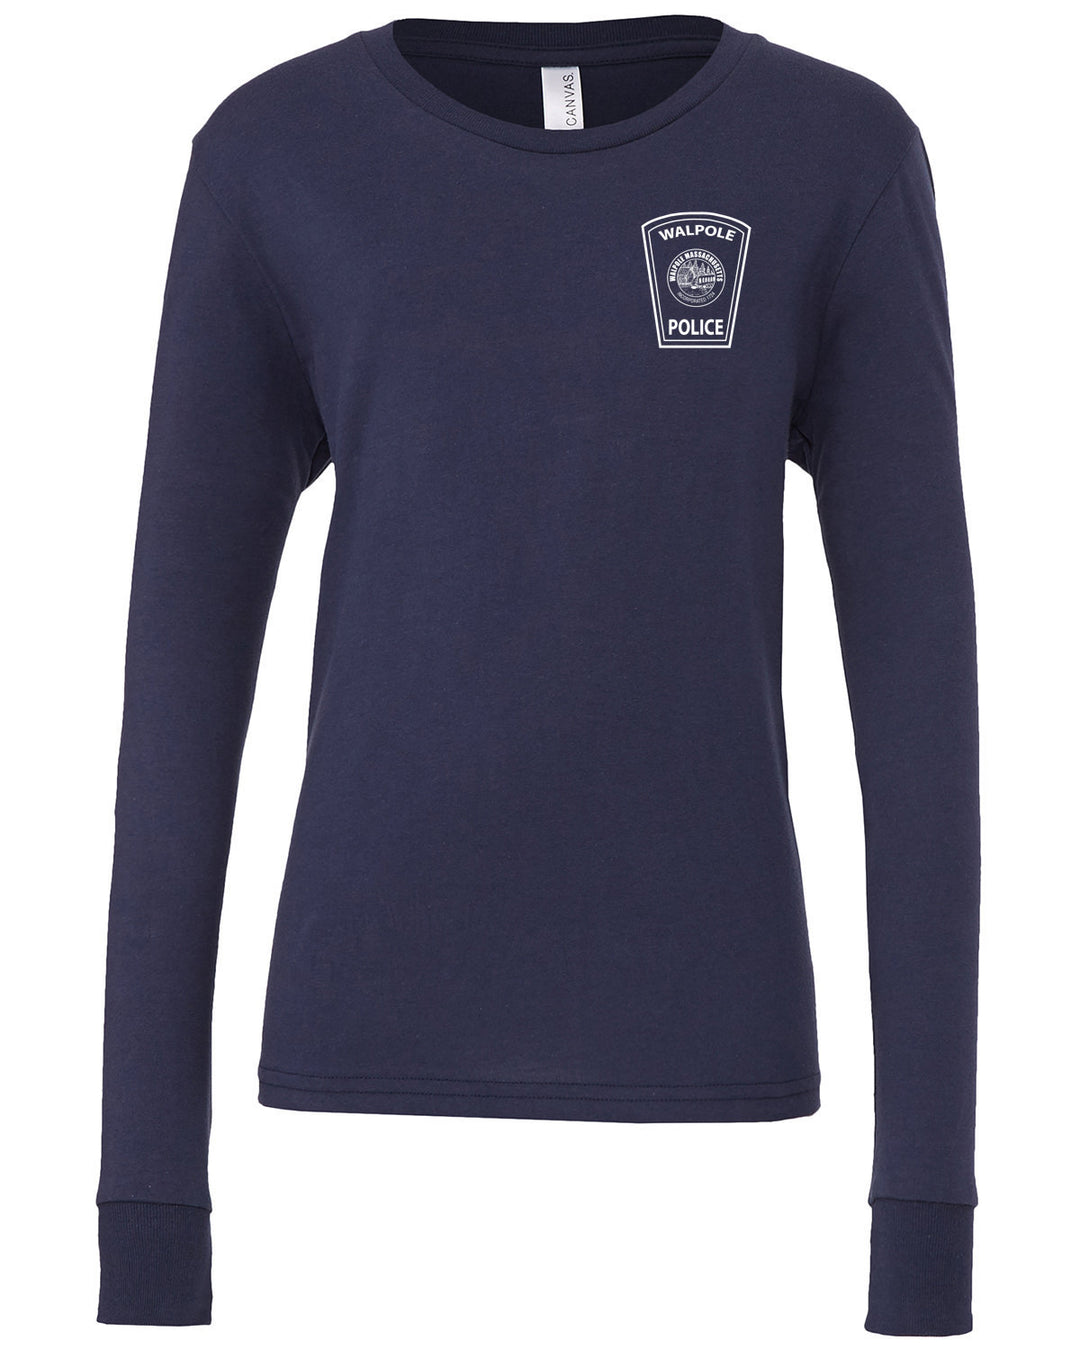 WPD 115 Youth Long Sleeve T-Shirt (3501Y)